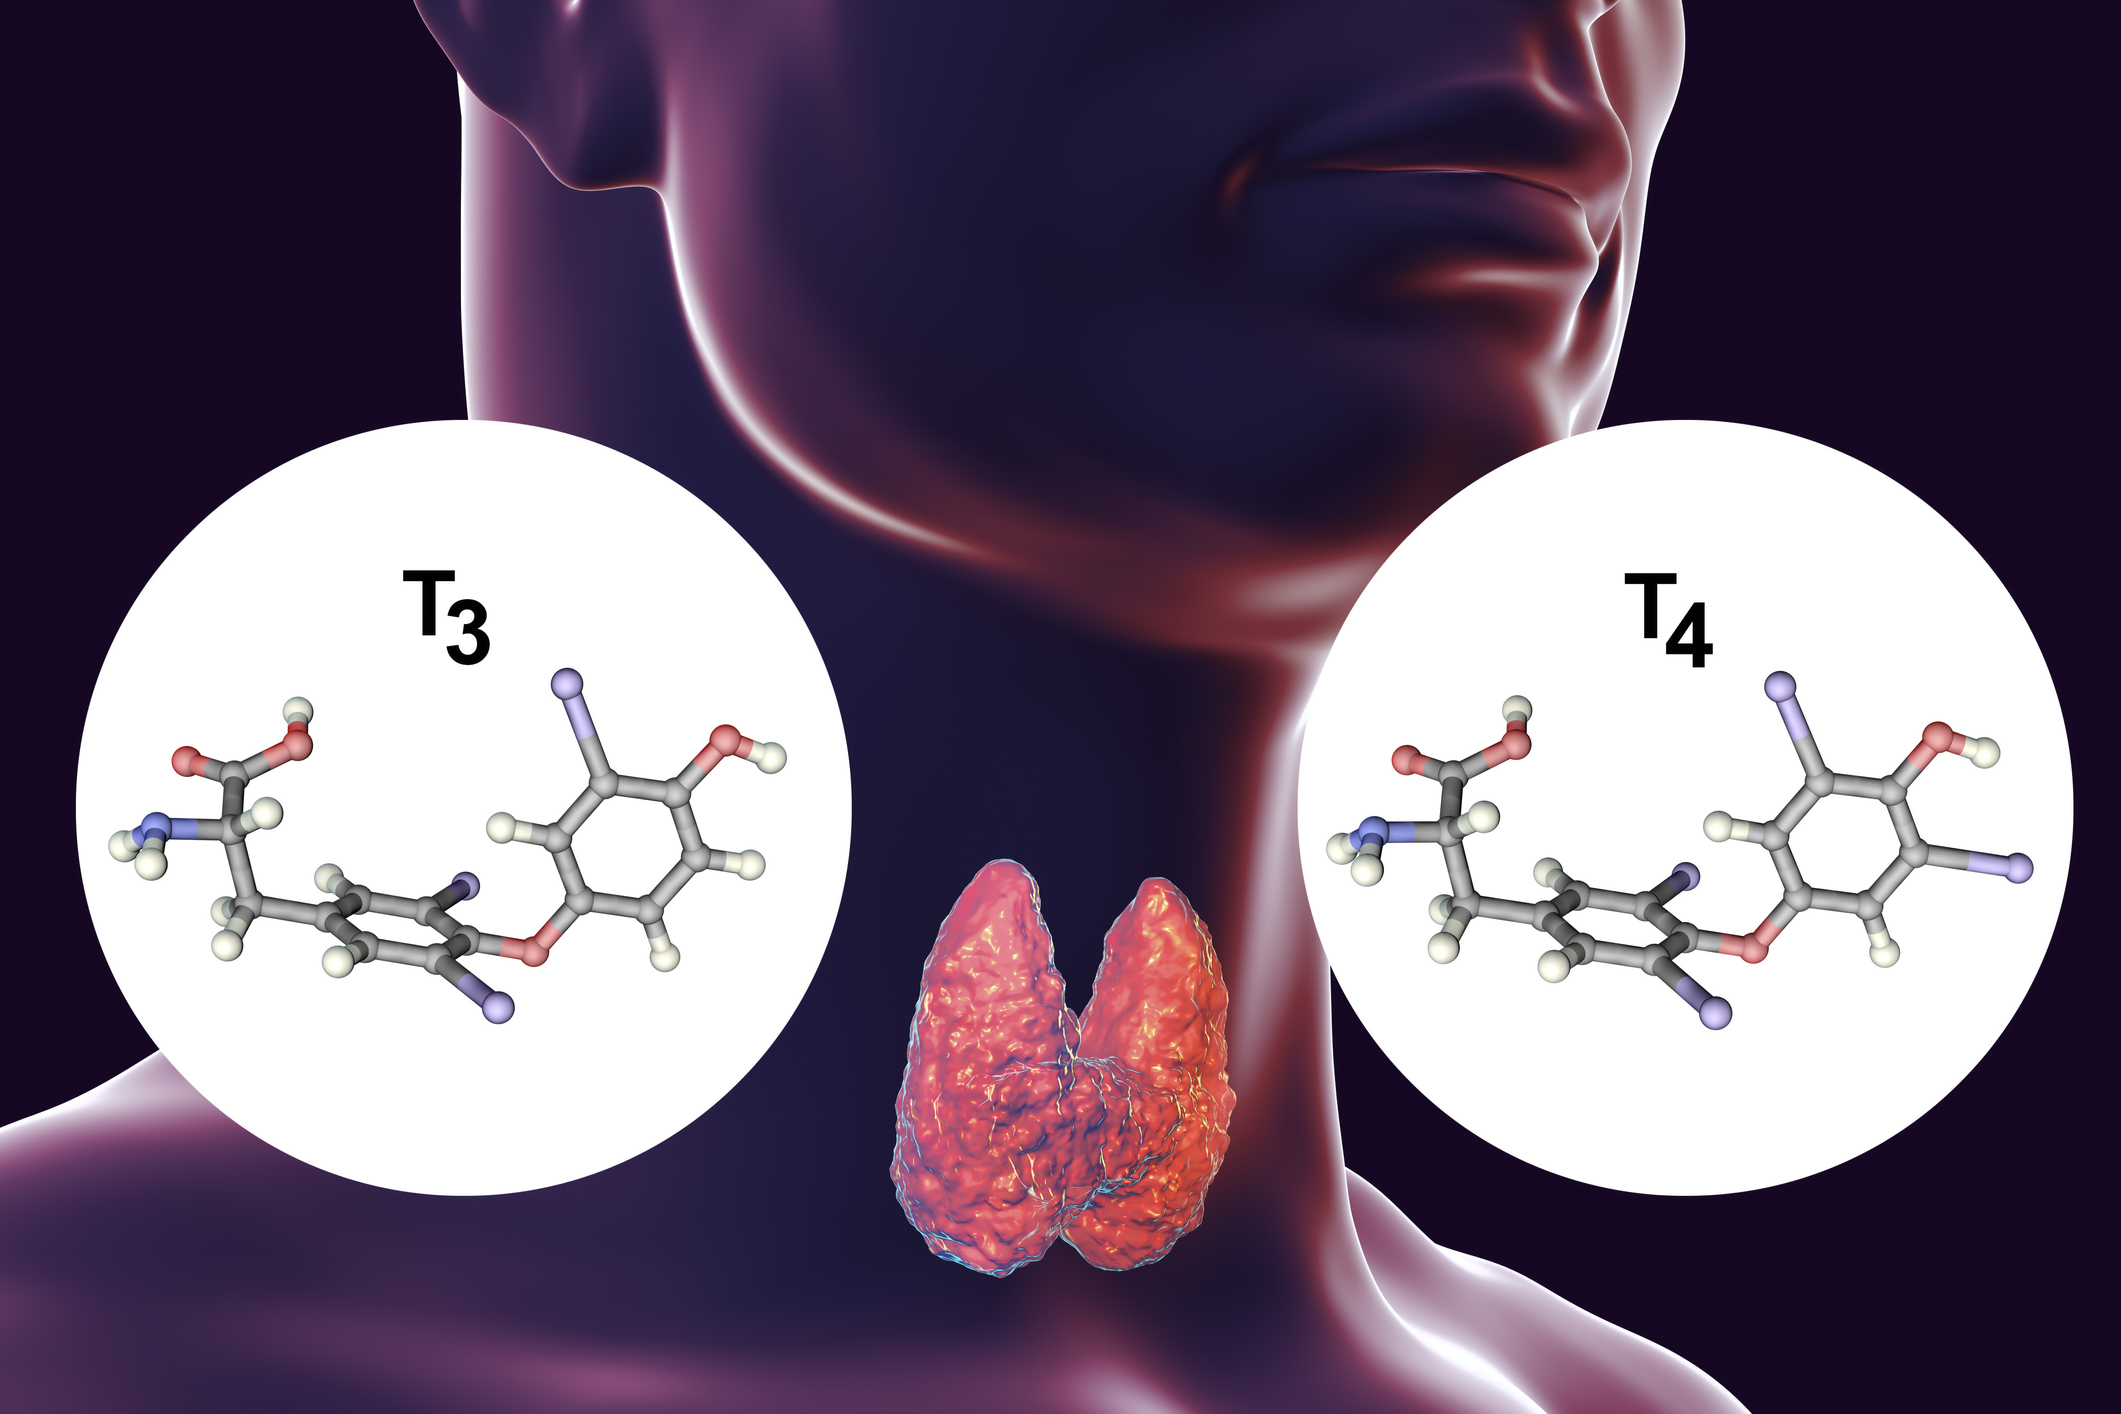 The thyroid gland is a producer of thyroid hormones - thyroxine (T4) and triiodothyronine (T3).